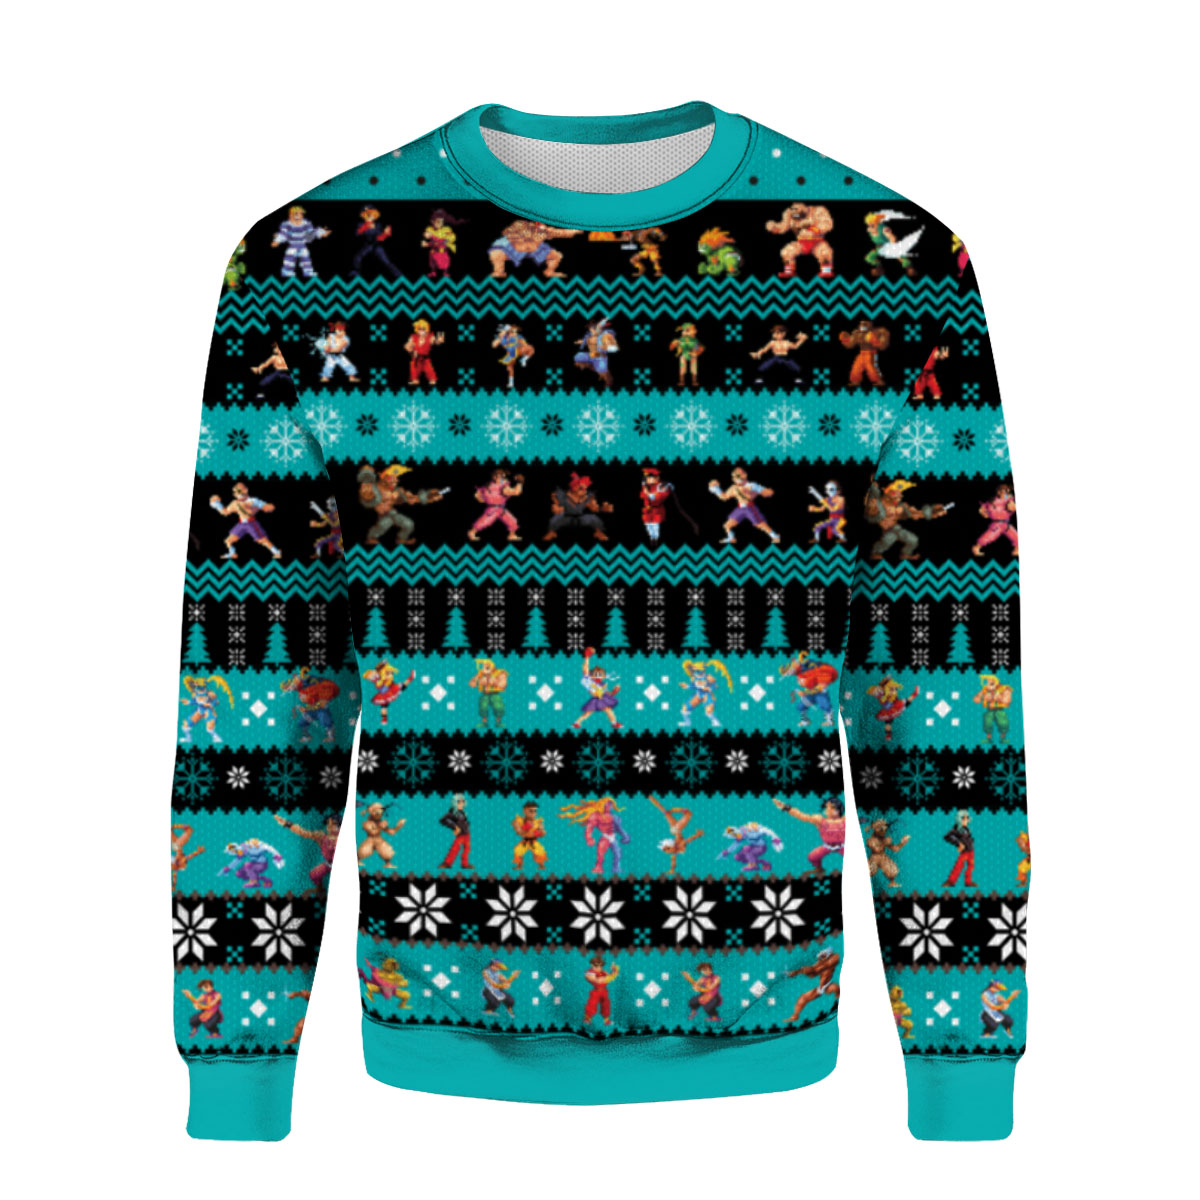 Street Fighter Christmas sweater - Endastore.com